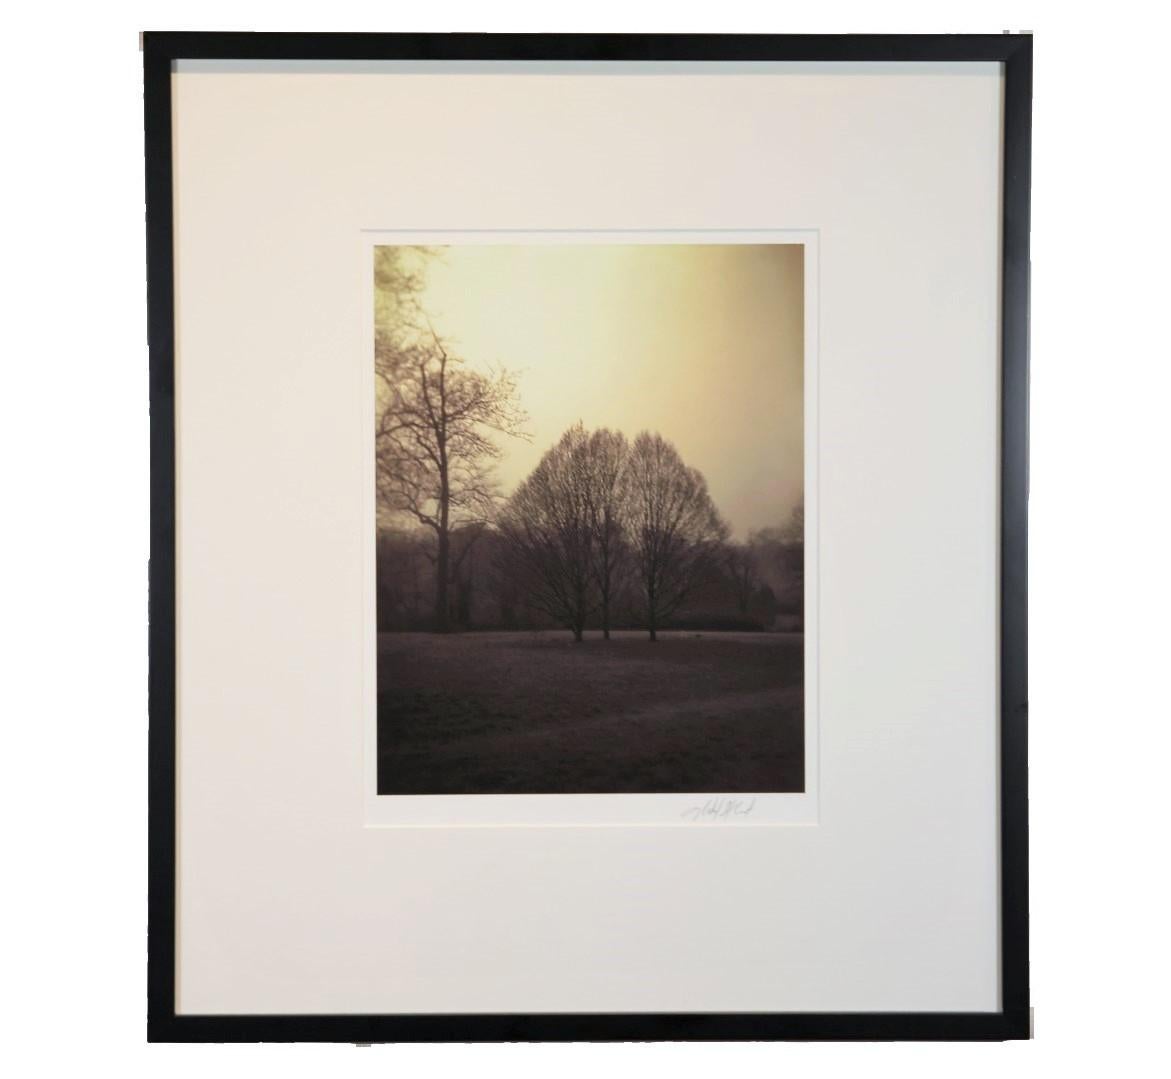 Michael Hart Landscape Photograph – Landschaftsfotografie mit Bäumen